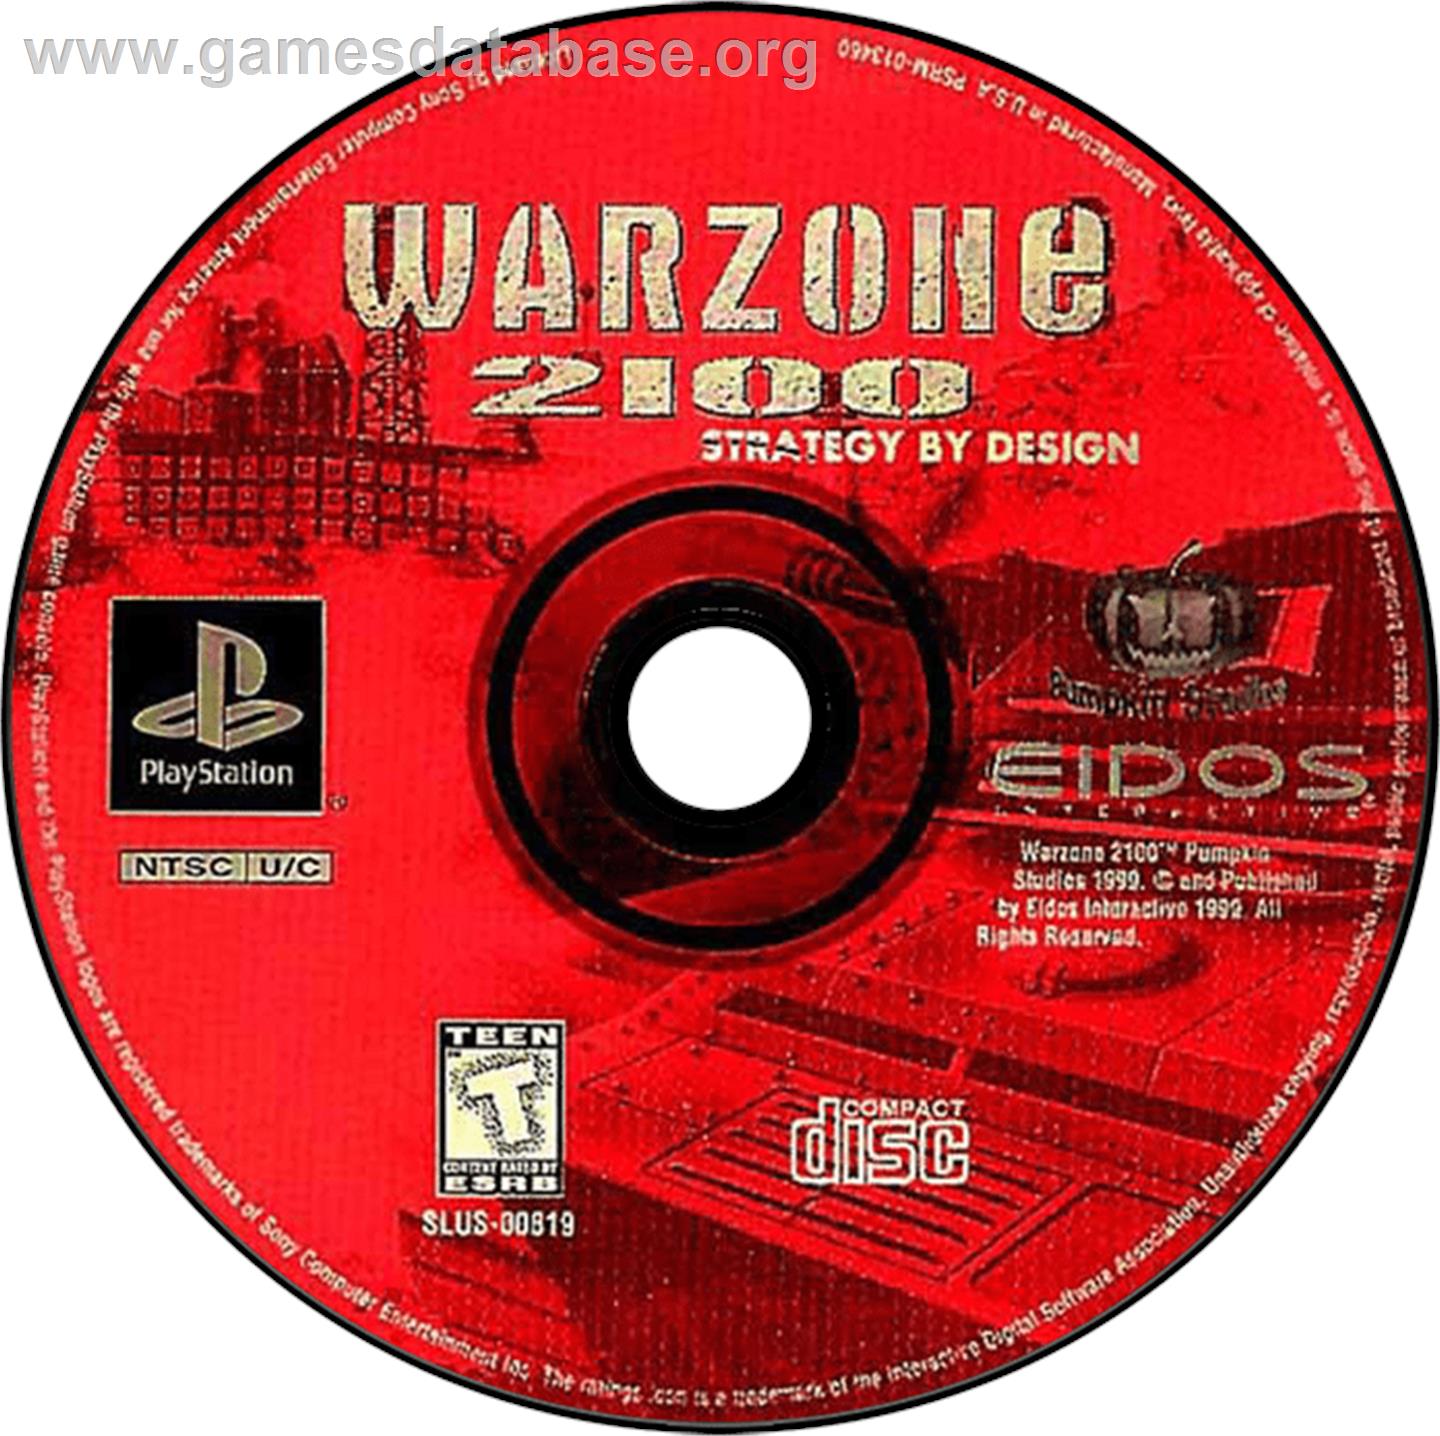 Warzone 2100 - Sony Playstation - Artwork - Disc